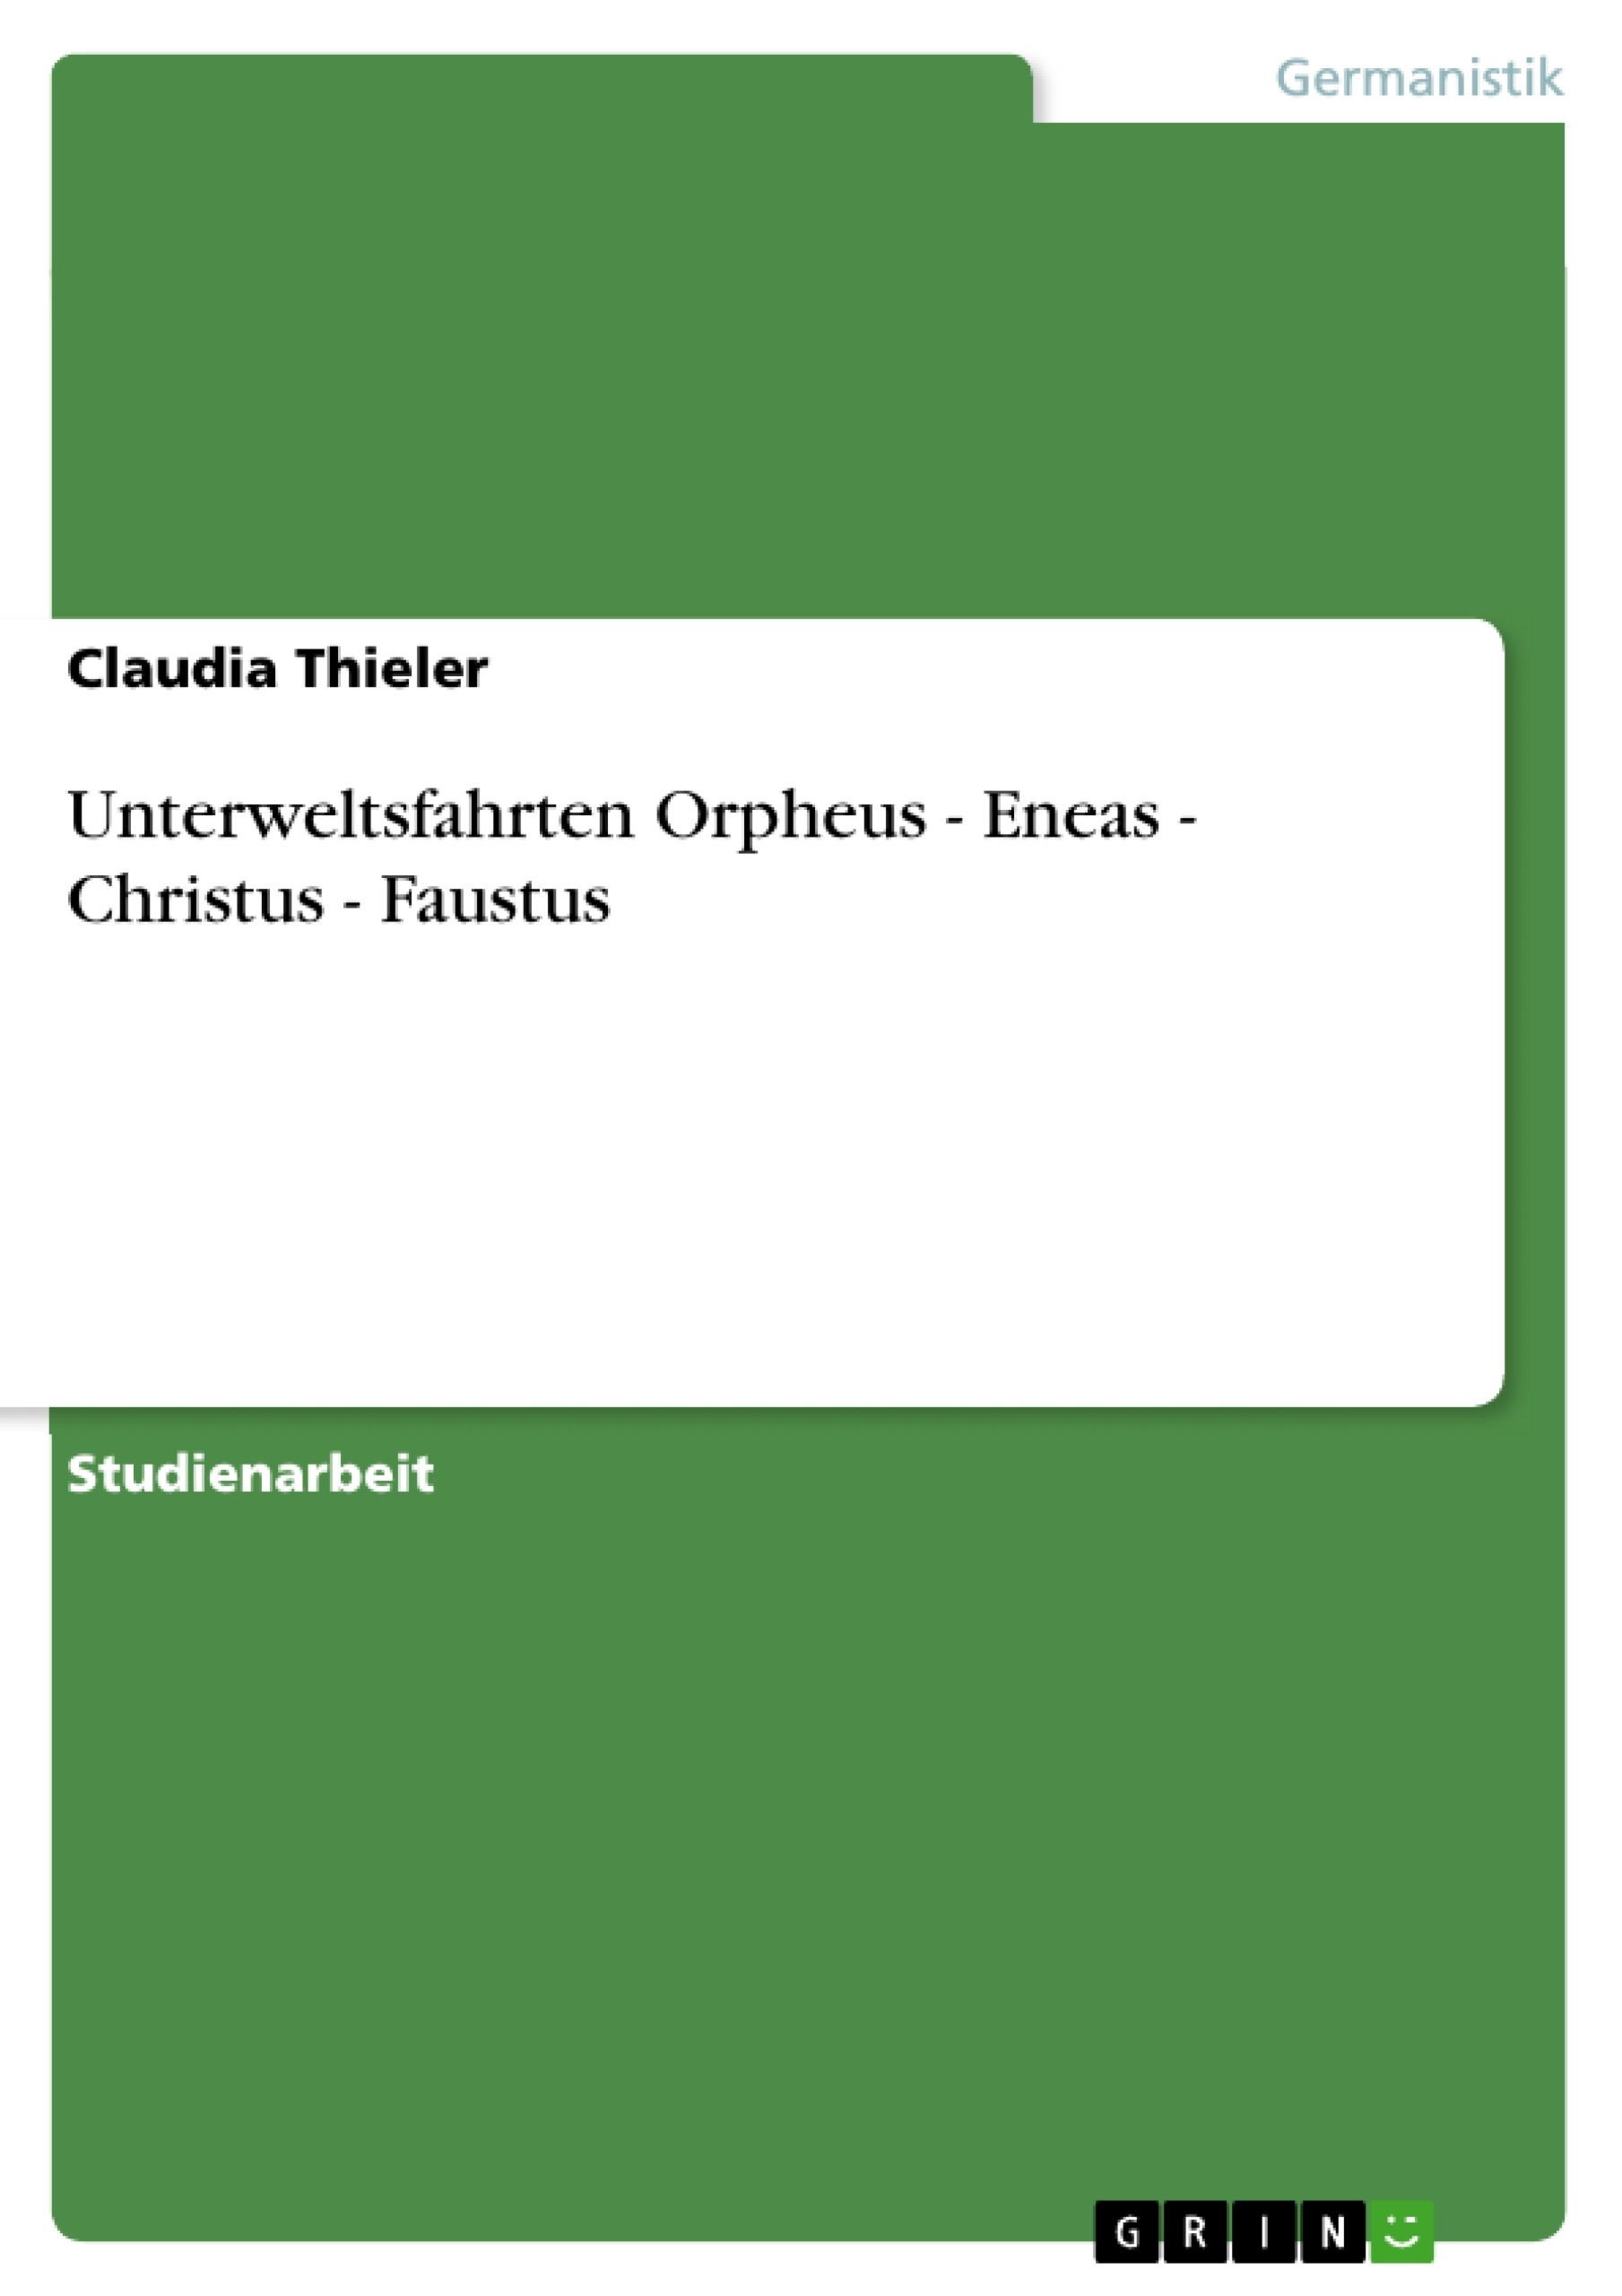 Title: Unterweltsfahrten Orpheus - Eneas - Christus - Faustus